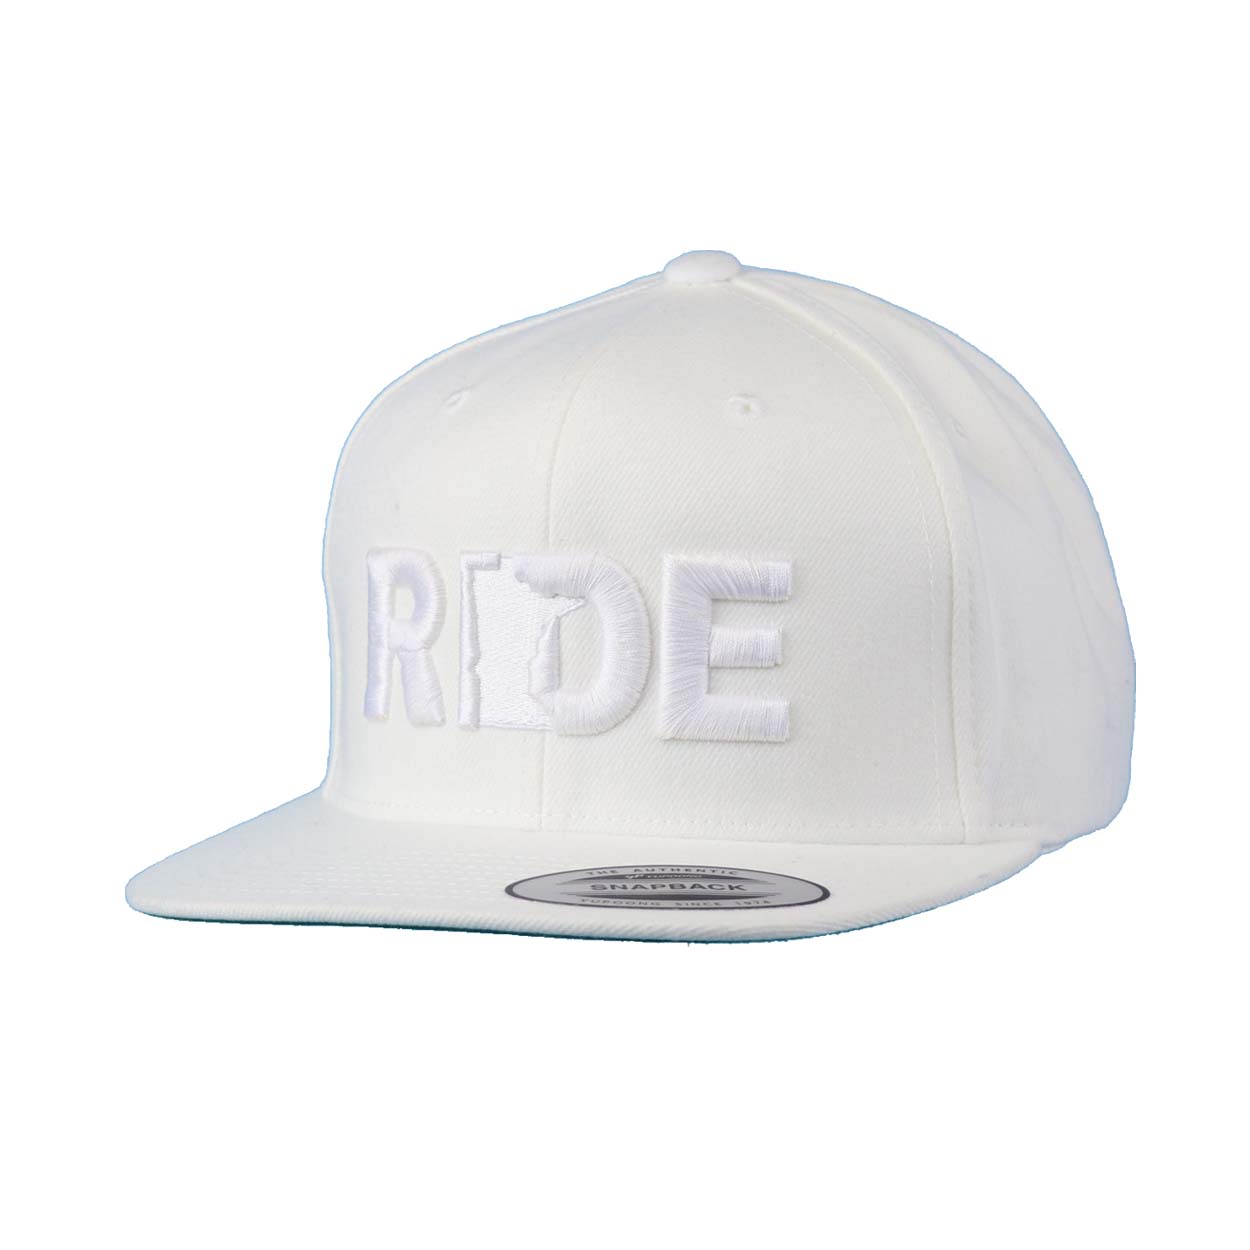 Ride Minnesota Classic Embroidered Snapback Flat Brim Hat White/White